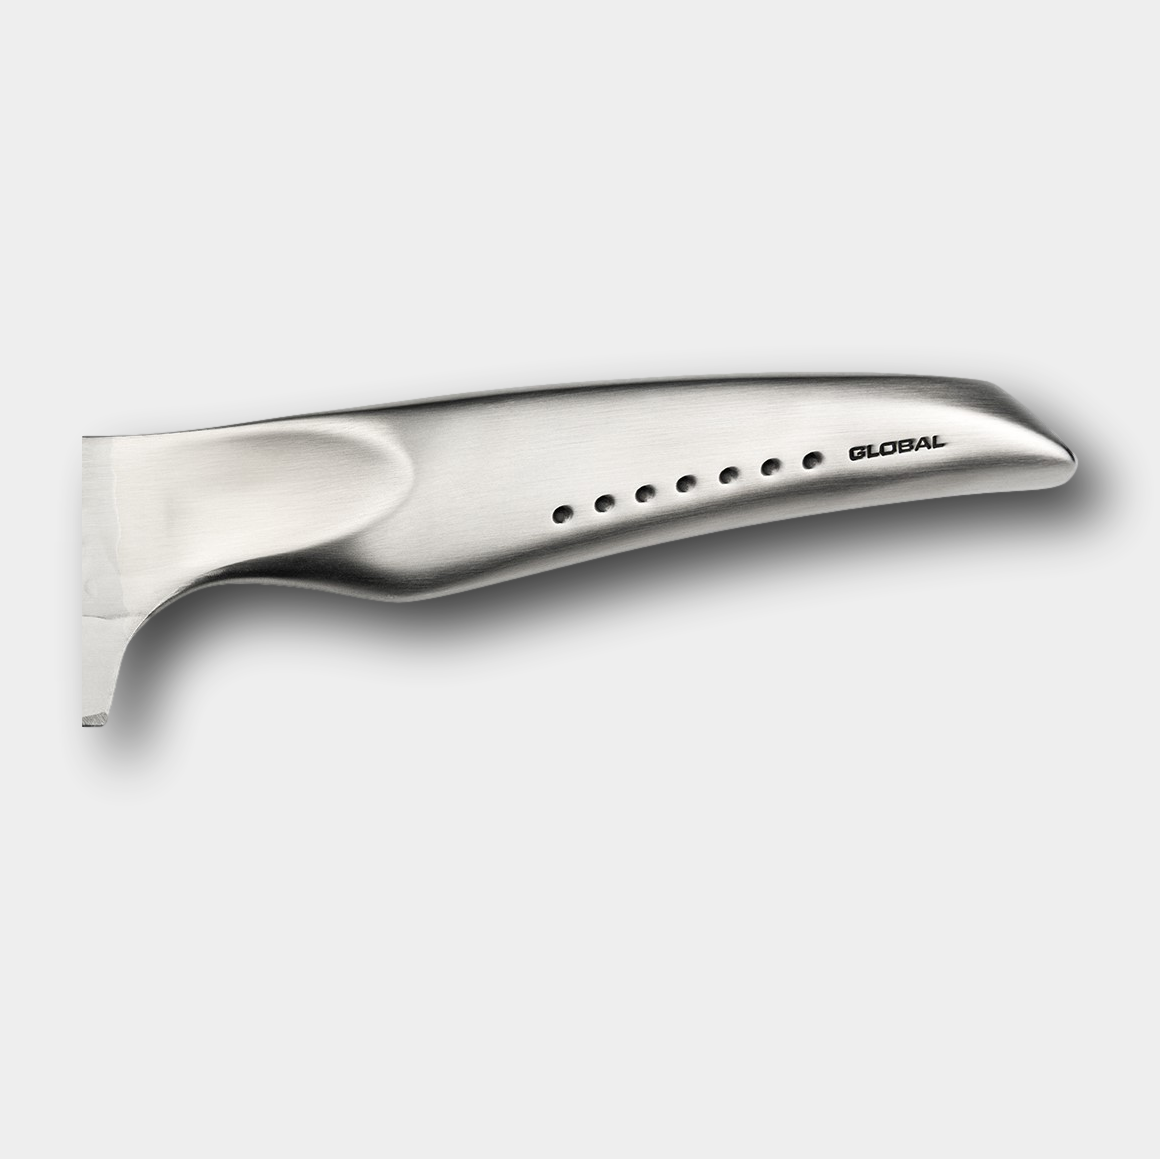 Global Sai Carving Knife 21cm